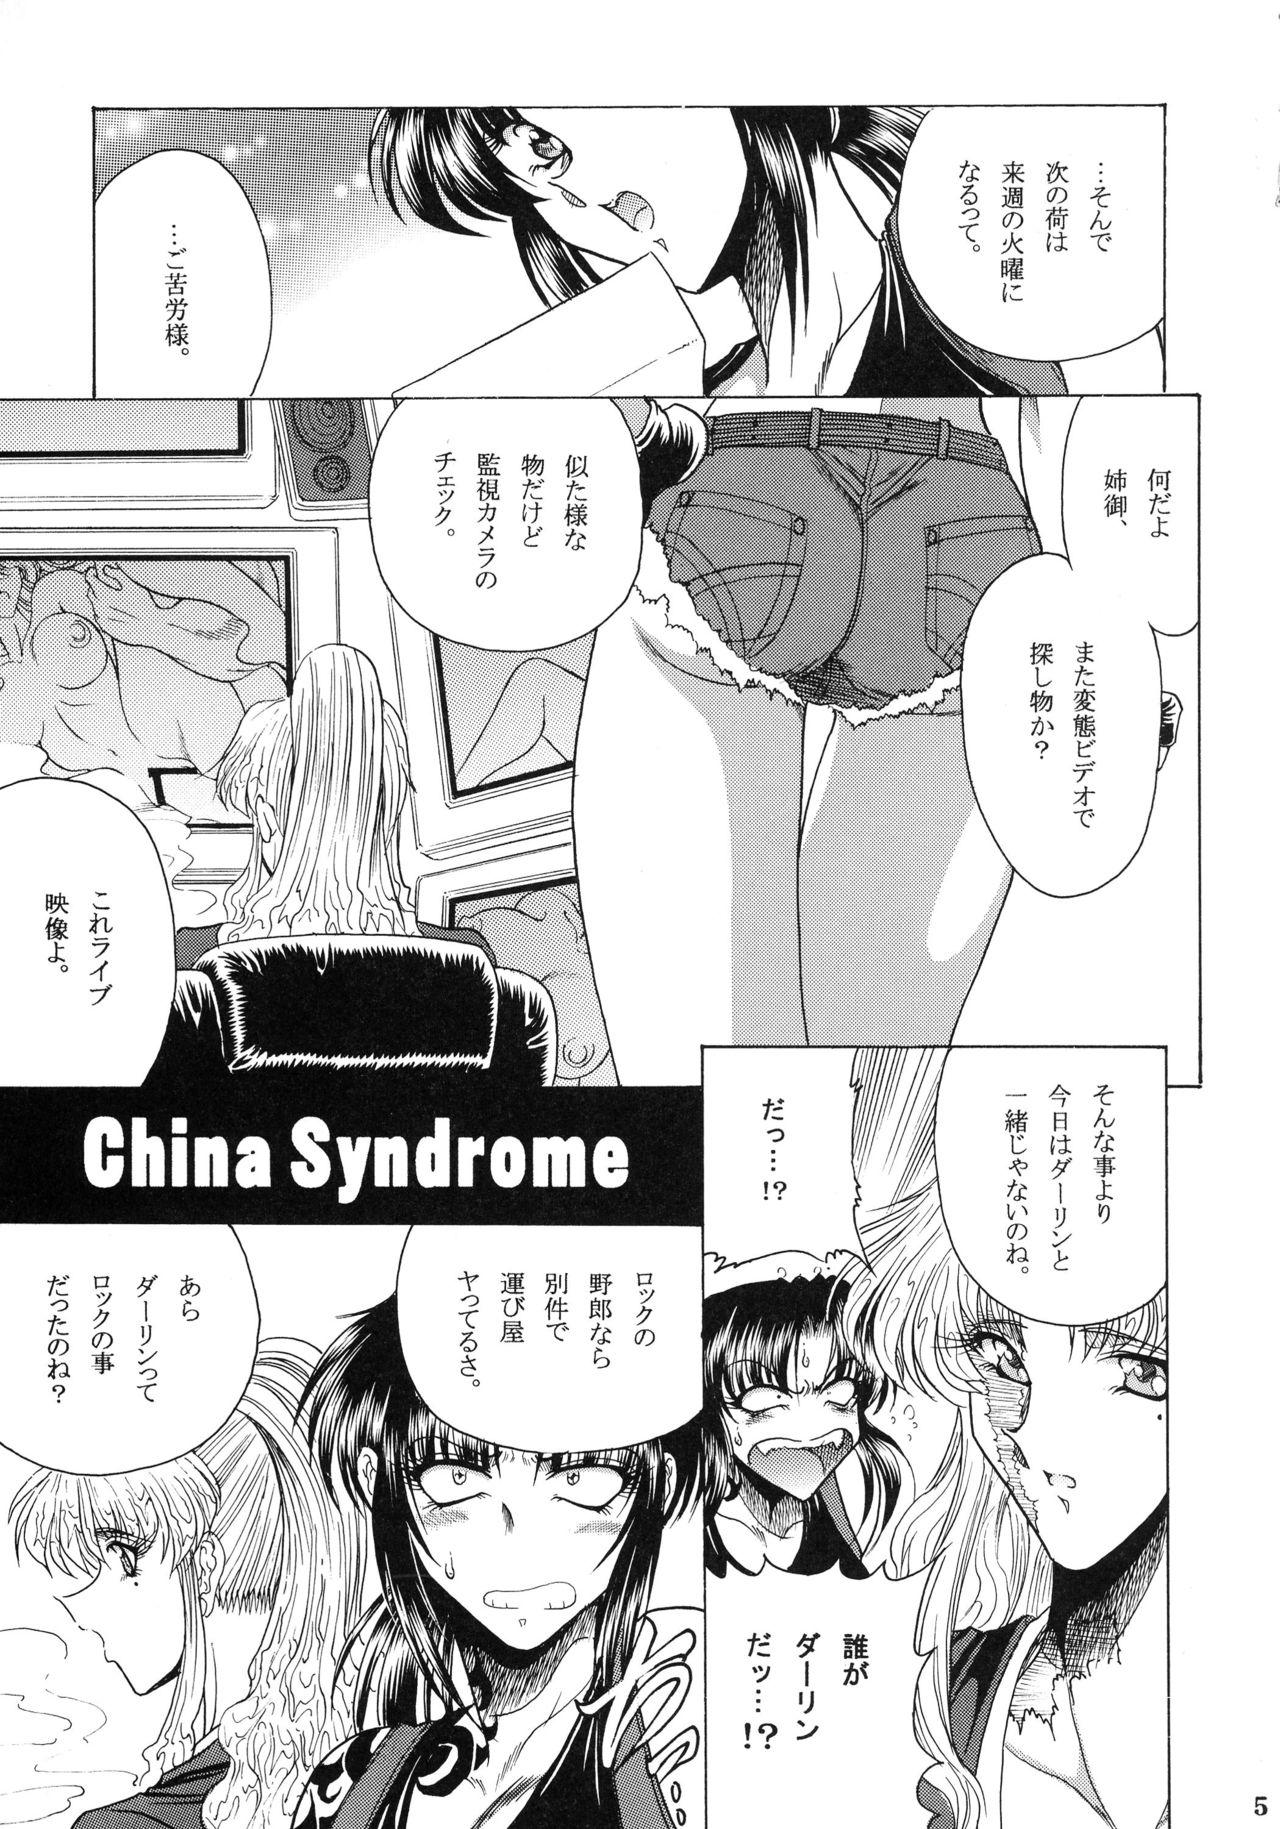 Gordinha ZONE 38 China Syndrome - Black lagoon Putinha - Page 4